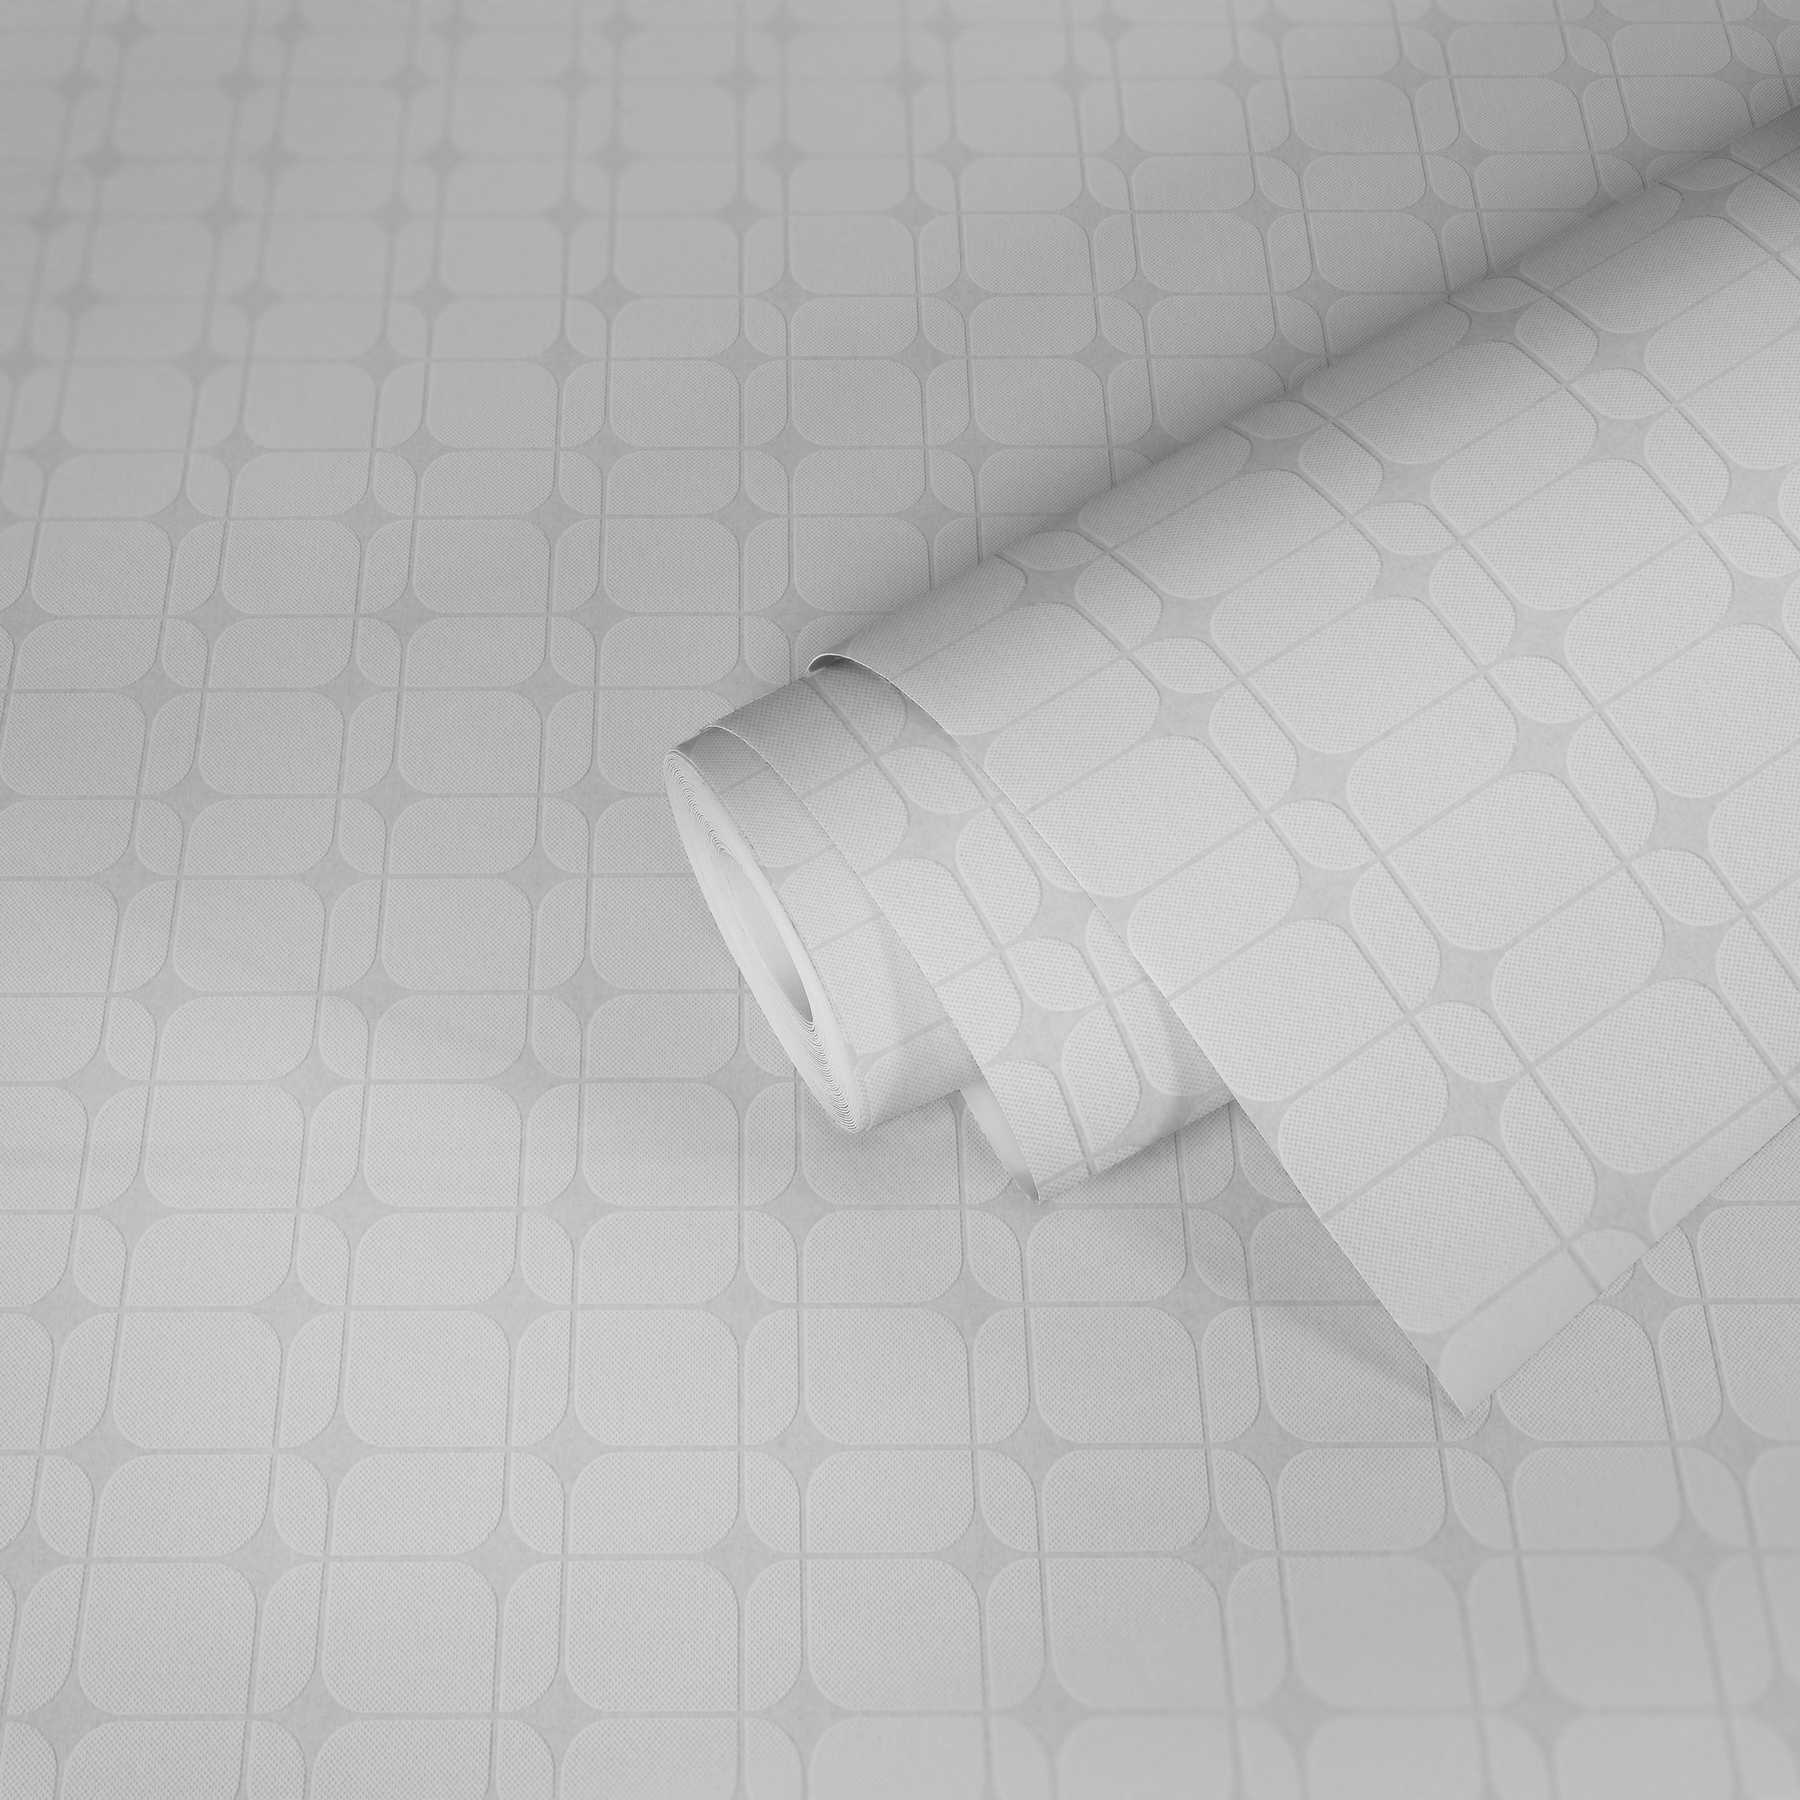             Papel pintado tejido-no tejido con motivo gráfico cuadrado - blanco
        